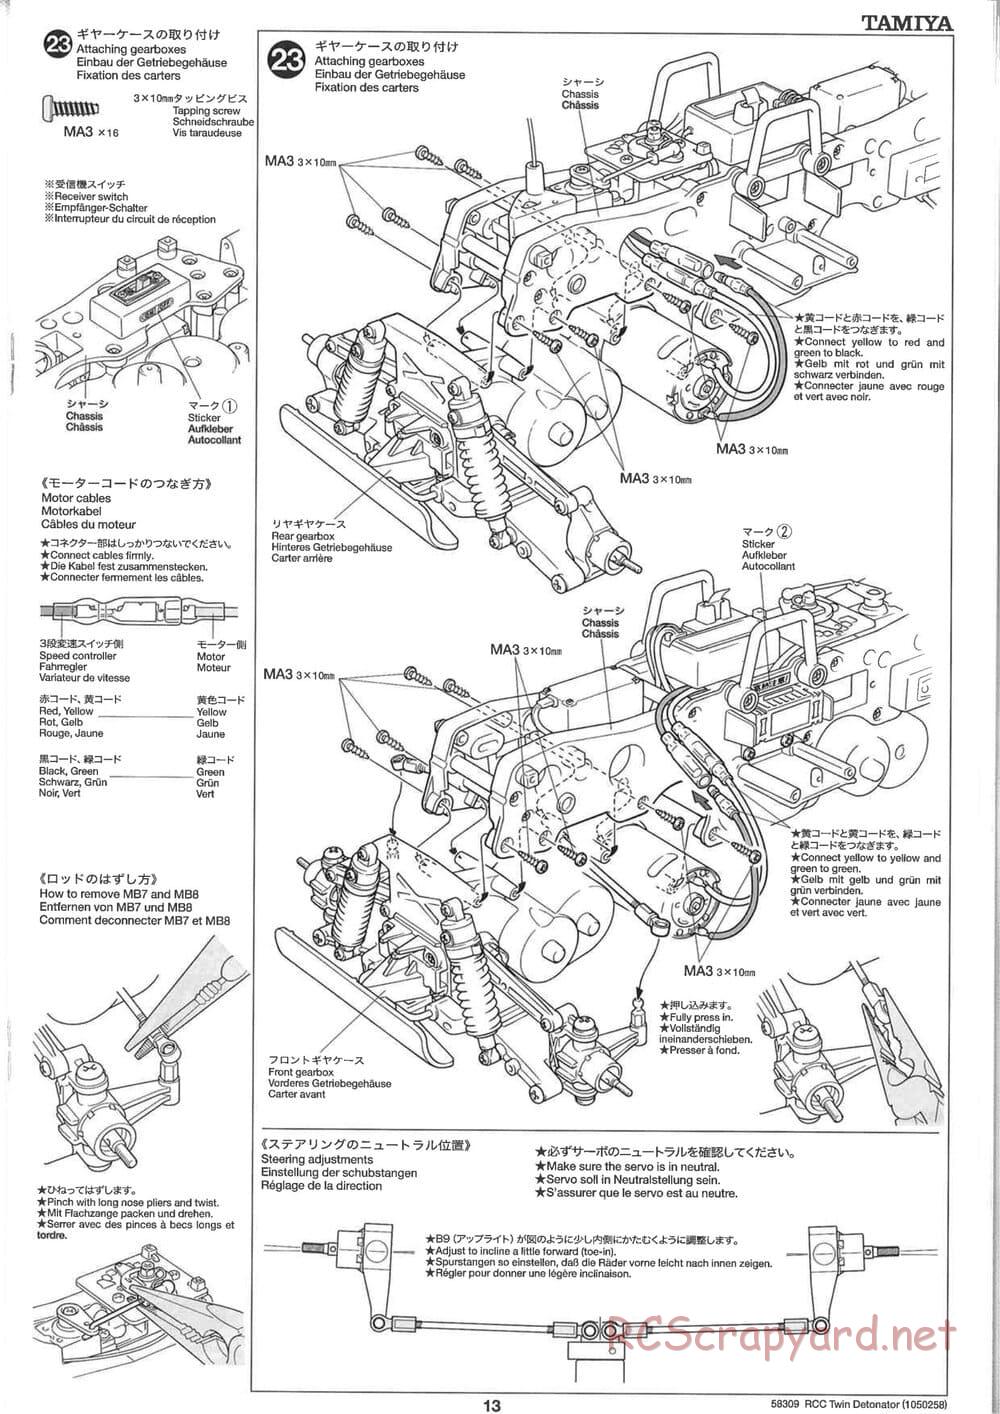 Tamiya - Twin Detonator - WR-01 Chassis - Manual - Page 13